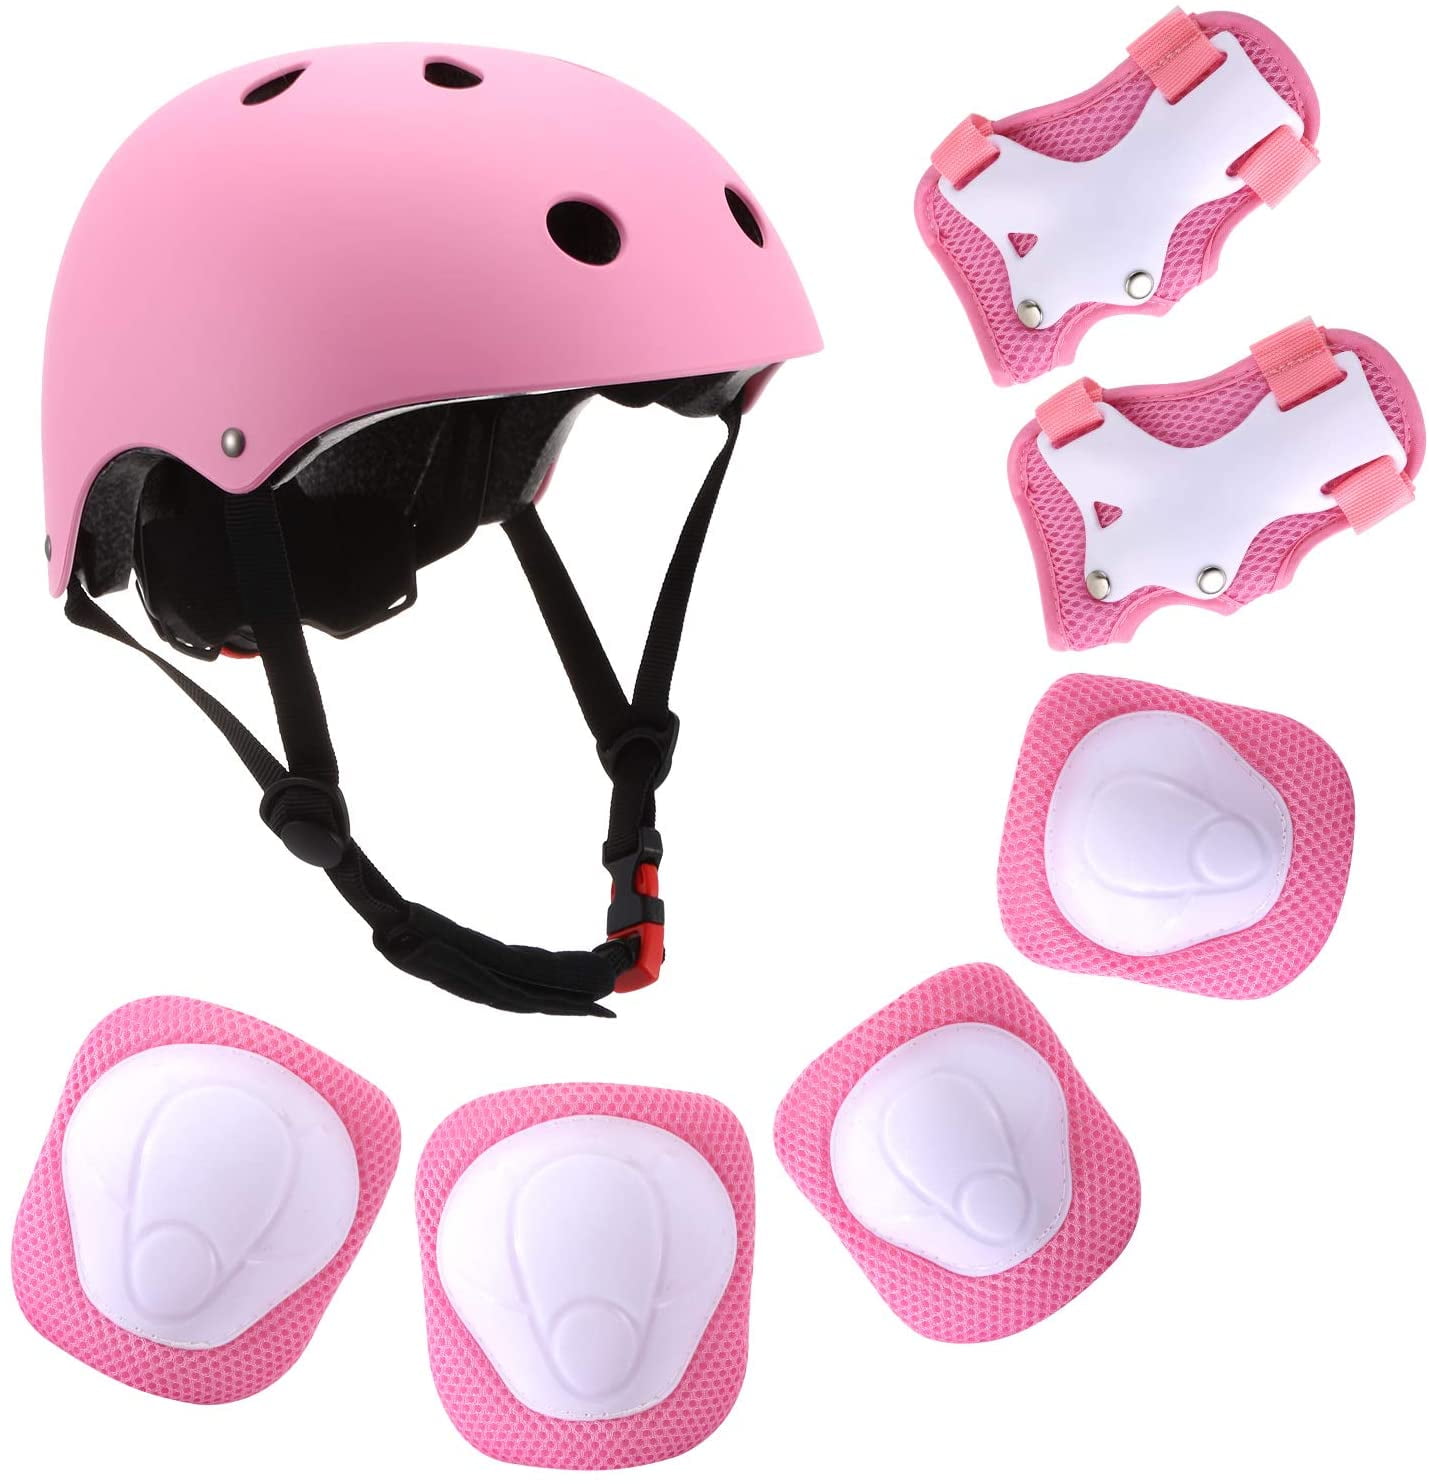 XJD Kids Bike Helmet Toddler Helmet Kids Sport Protective Gear Set Boy Girl Adjustable Child Cycling Helmet with Knee Pads Elbow Pads Wrist Guards Youth Skateboard Helmet for Kids 